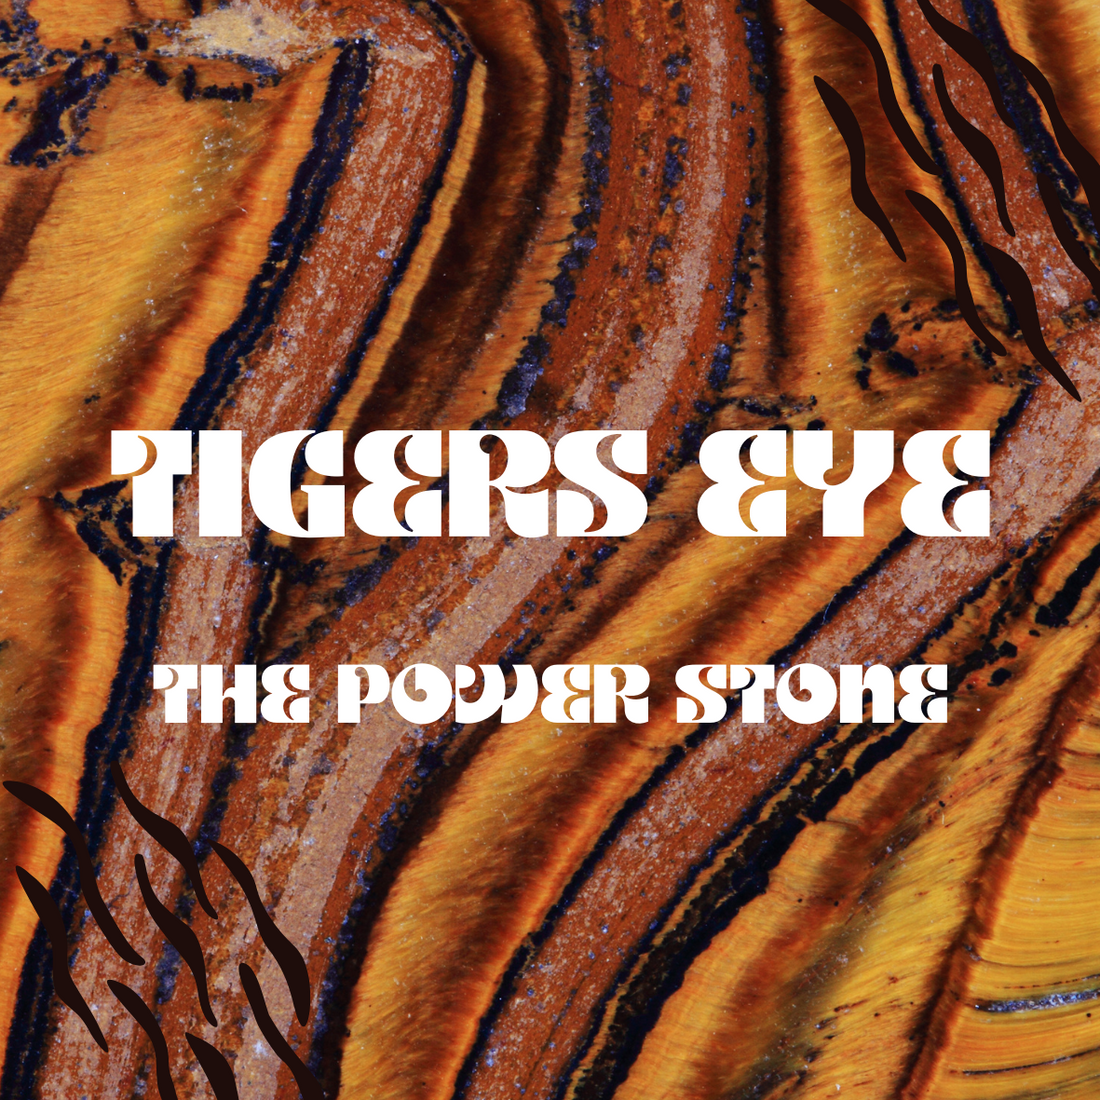 Tigers Eye: The Power Stone